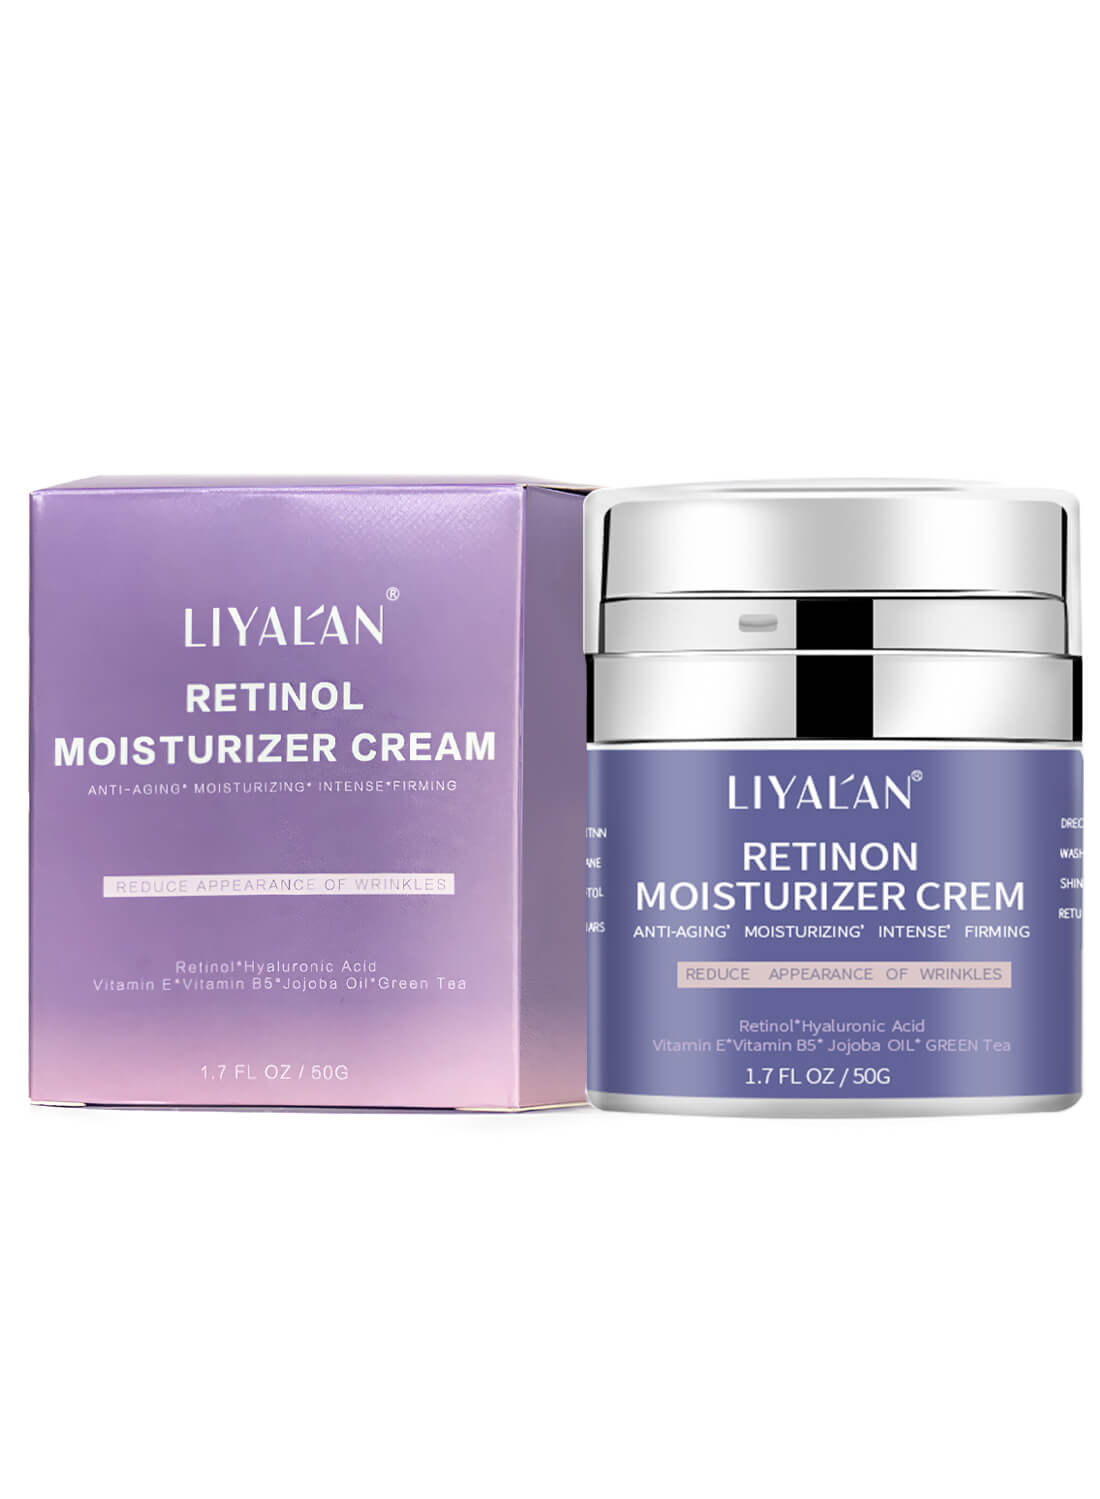 Liyalan Retinol Moisturizer Cream 50g